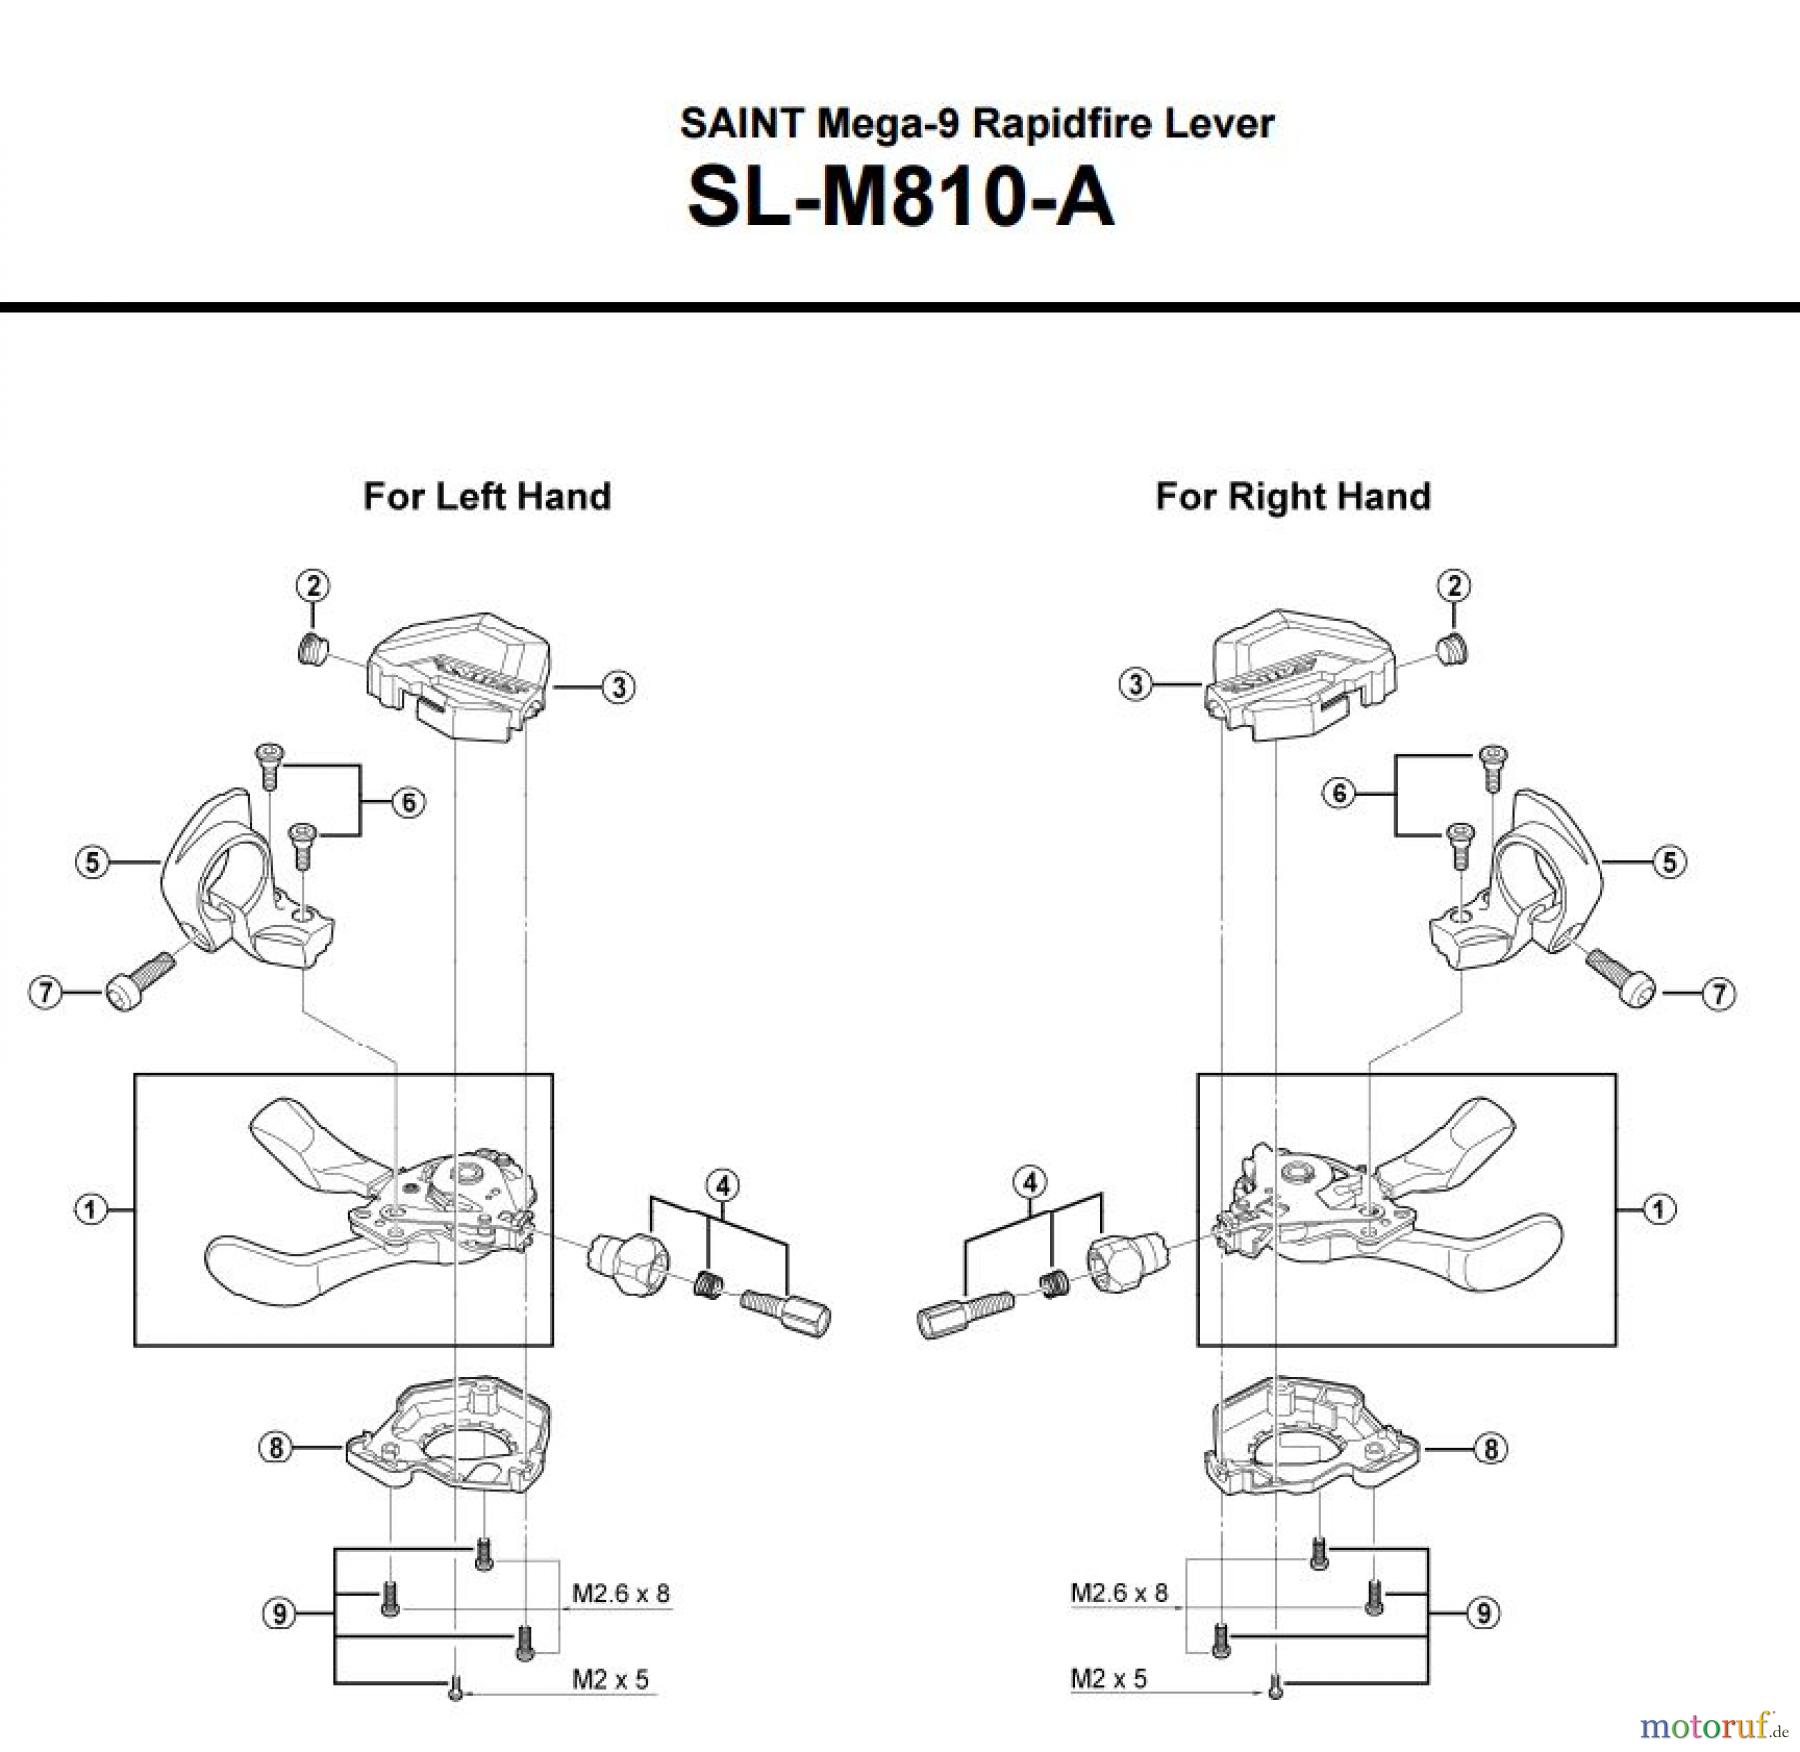  Shimano SL Shift Lever - Schalthebel SL-M810-A SAINT Mega-9 Rapidfire Lever